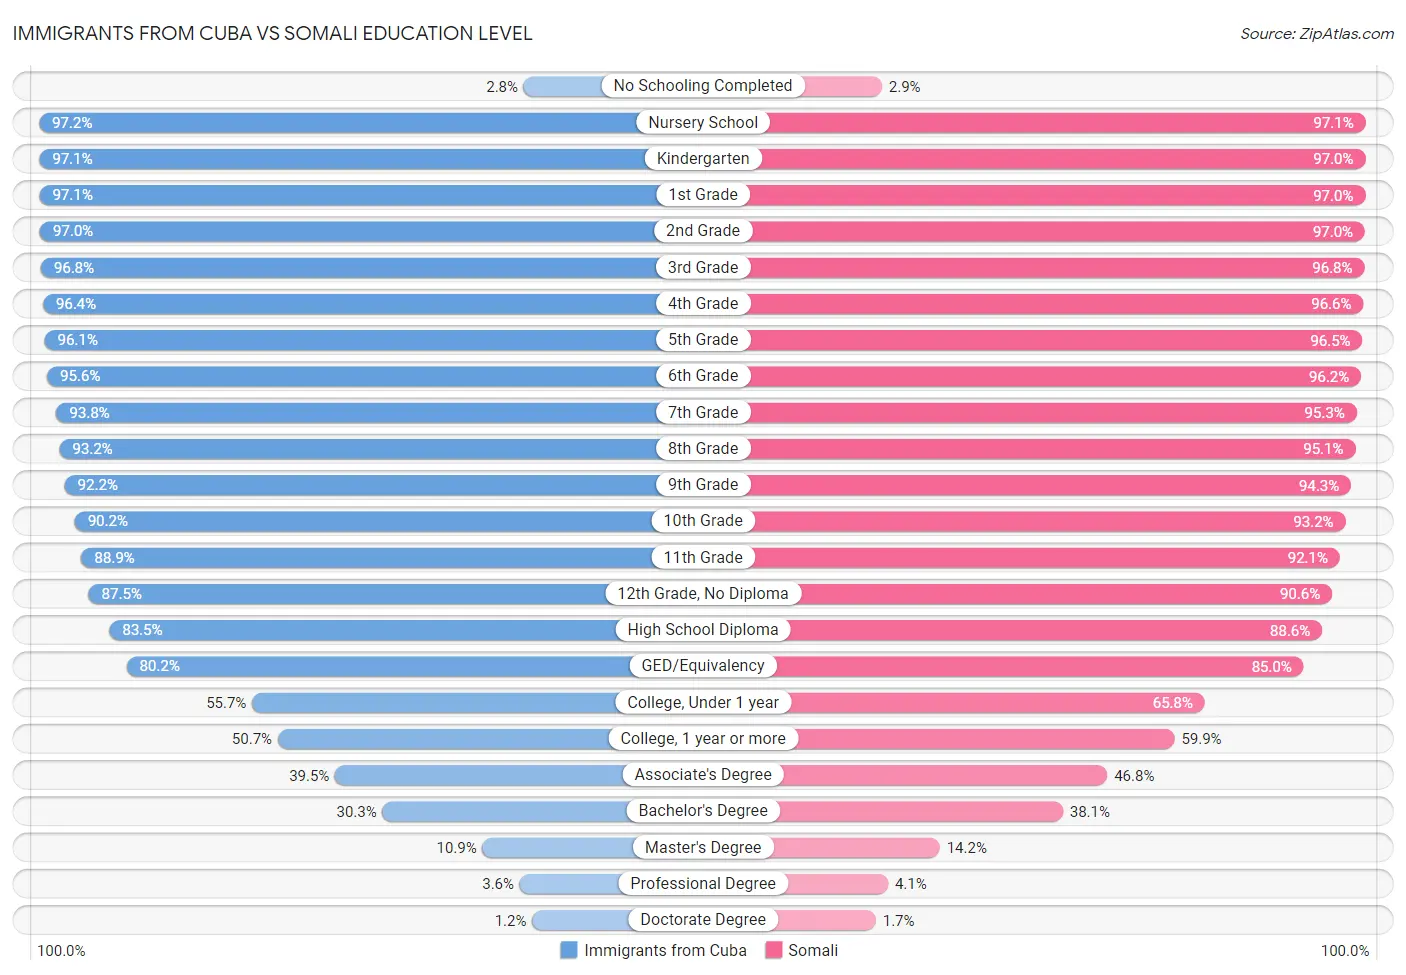 Immigrants from Cuba vs Somali Education Level